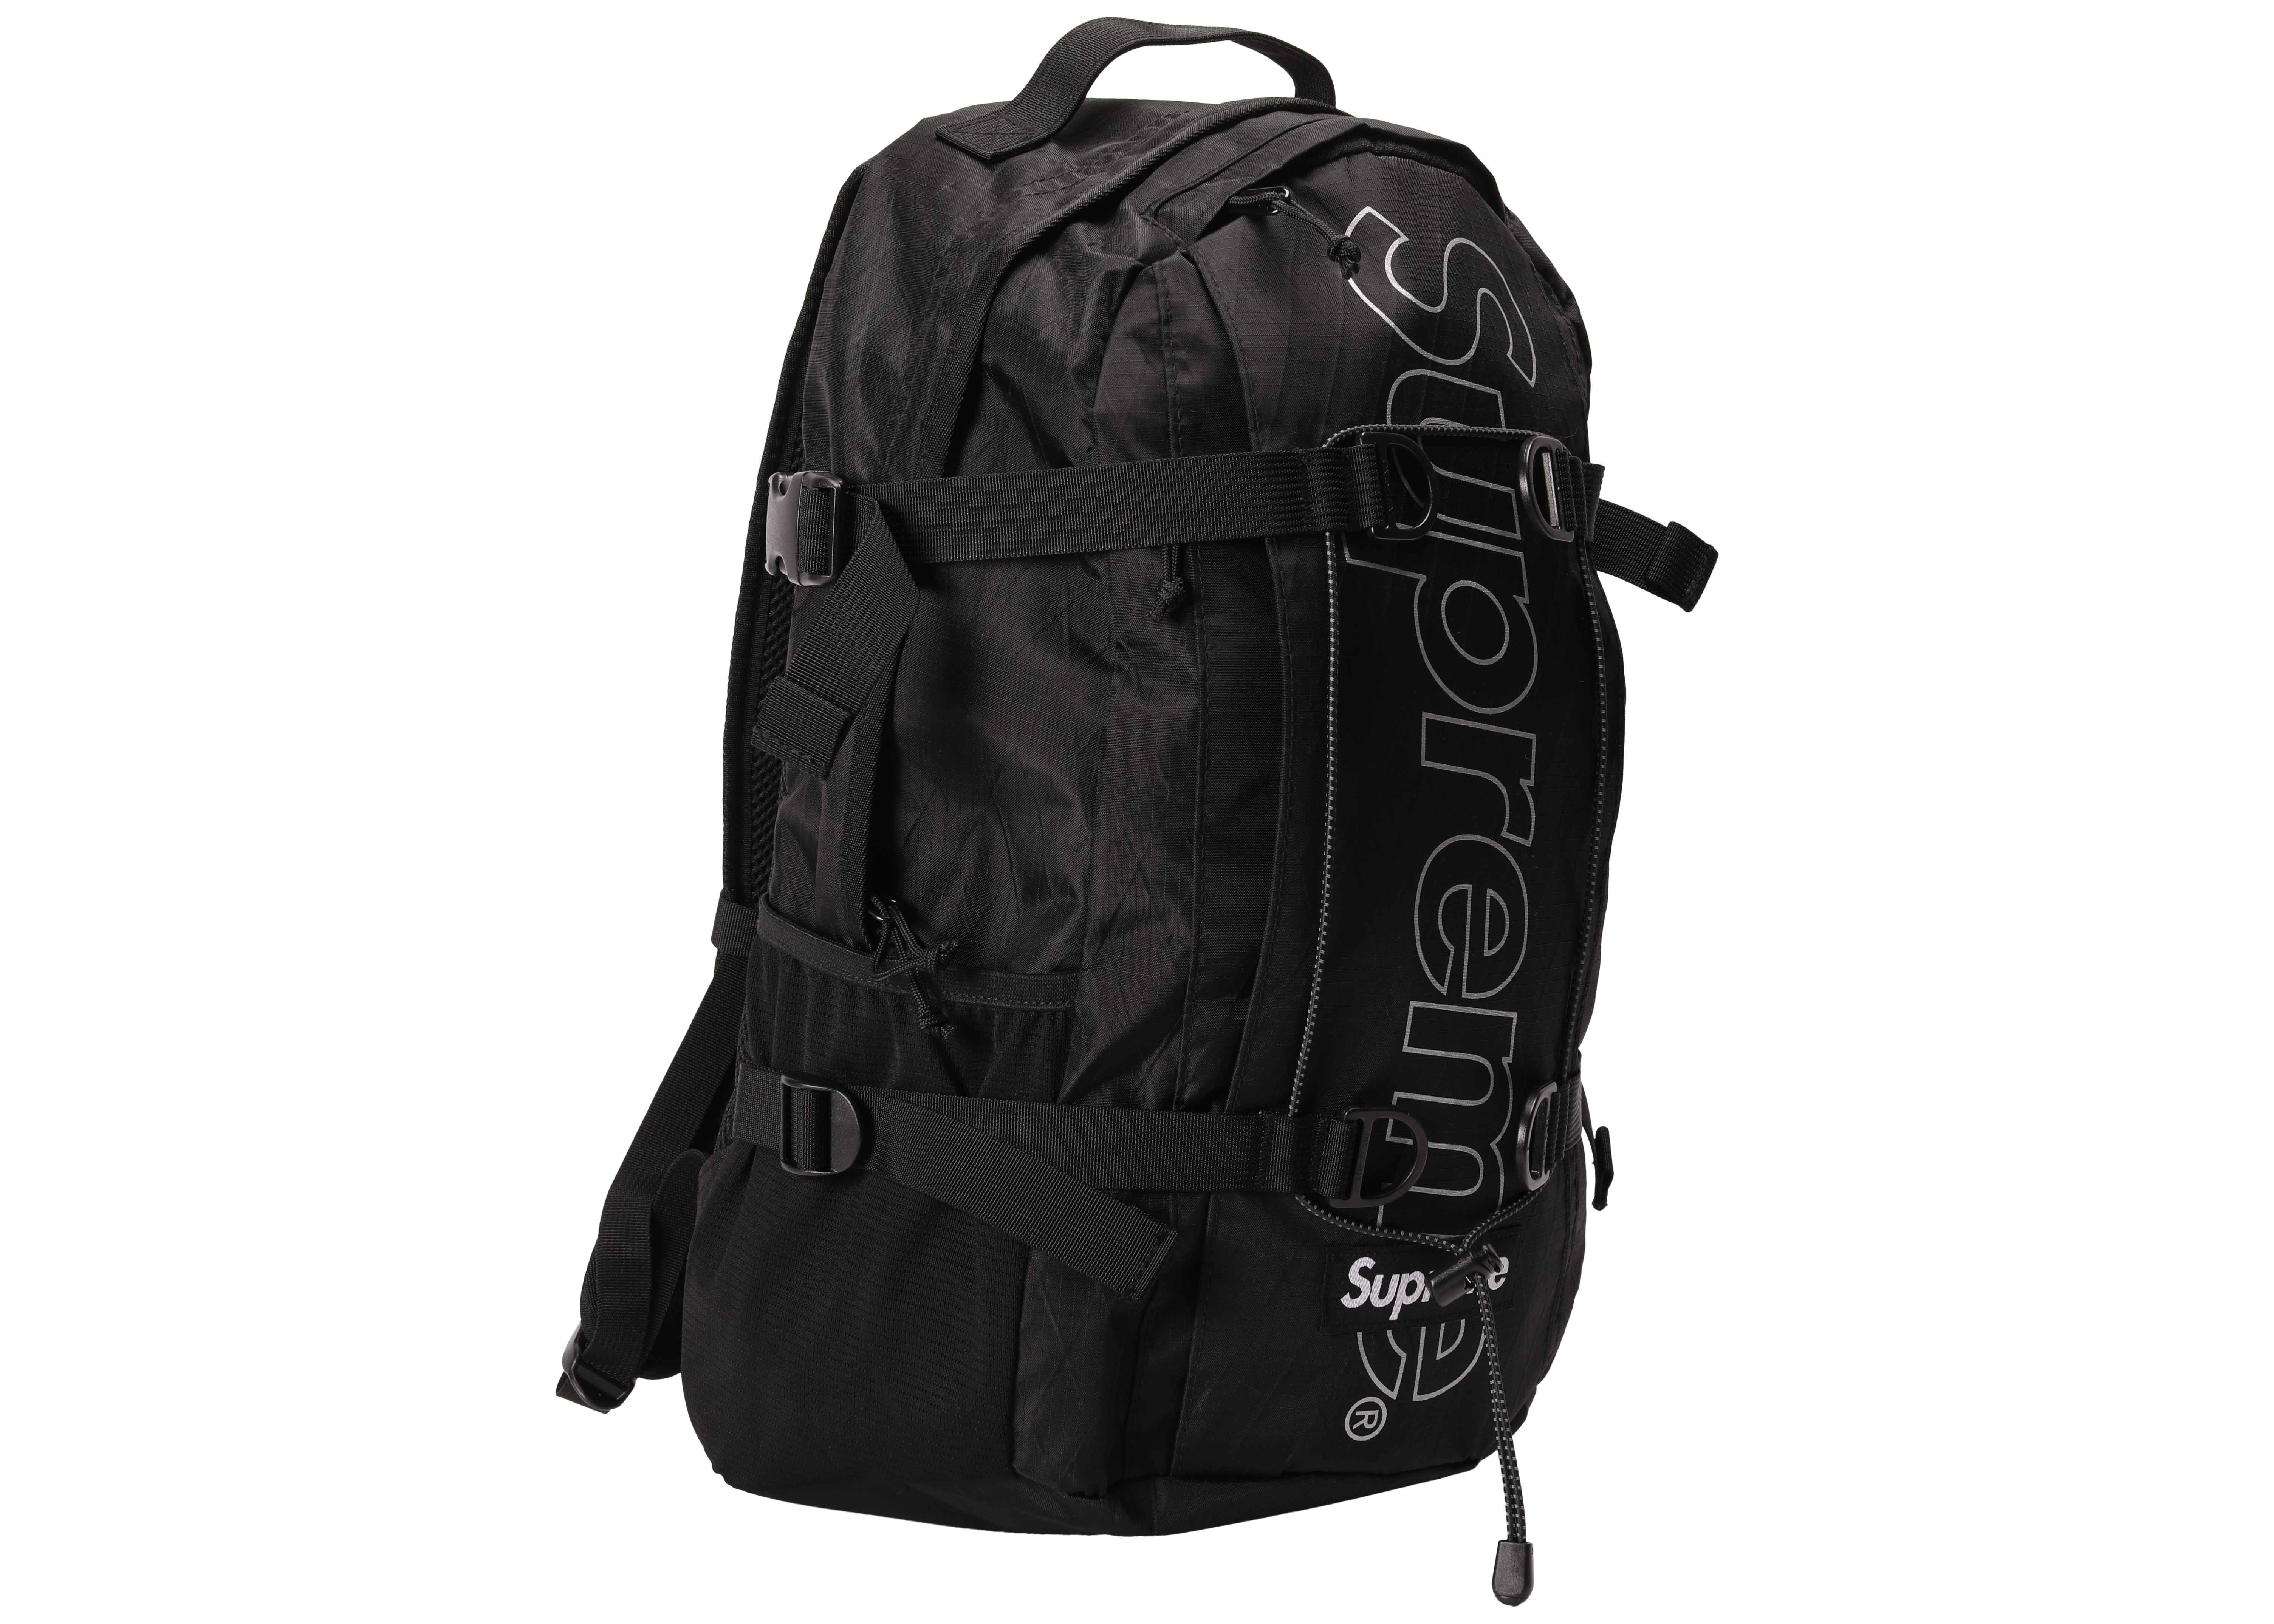 supreme backpack